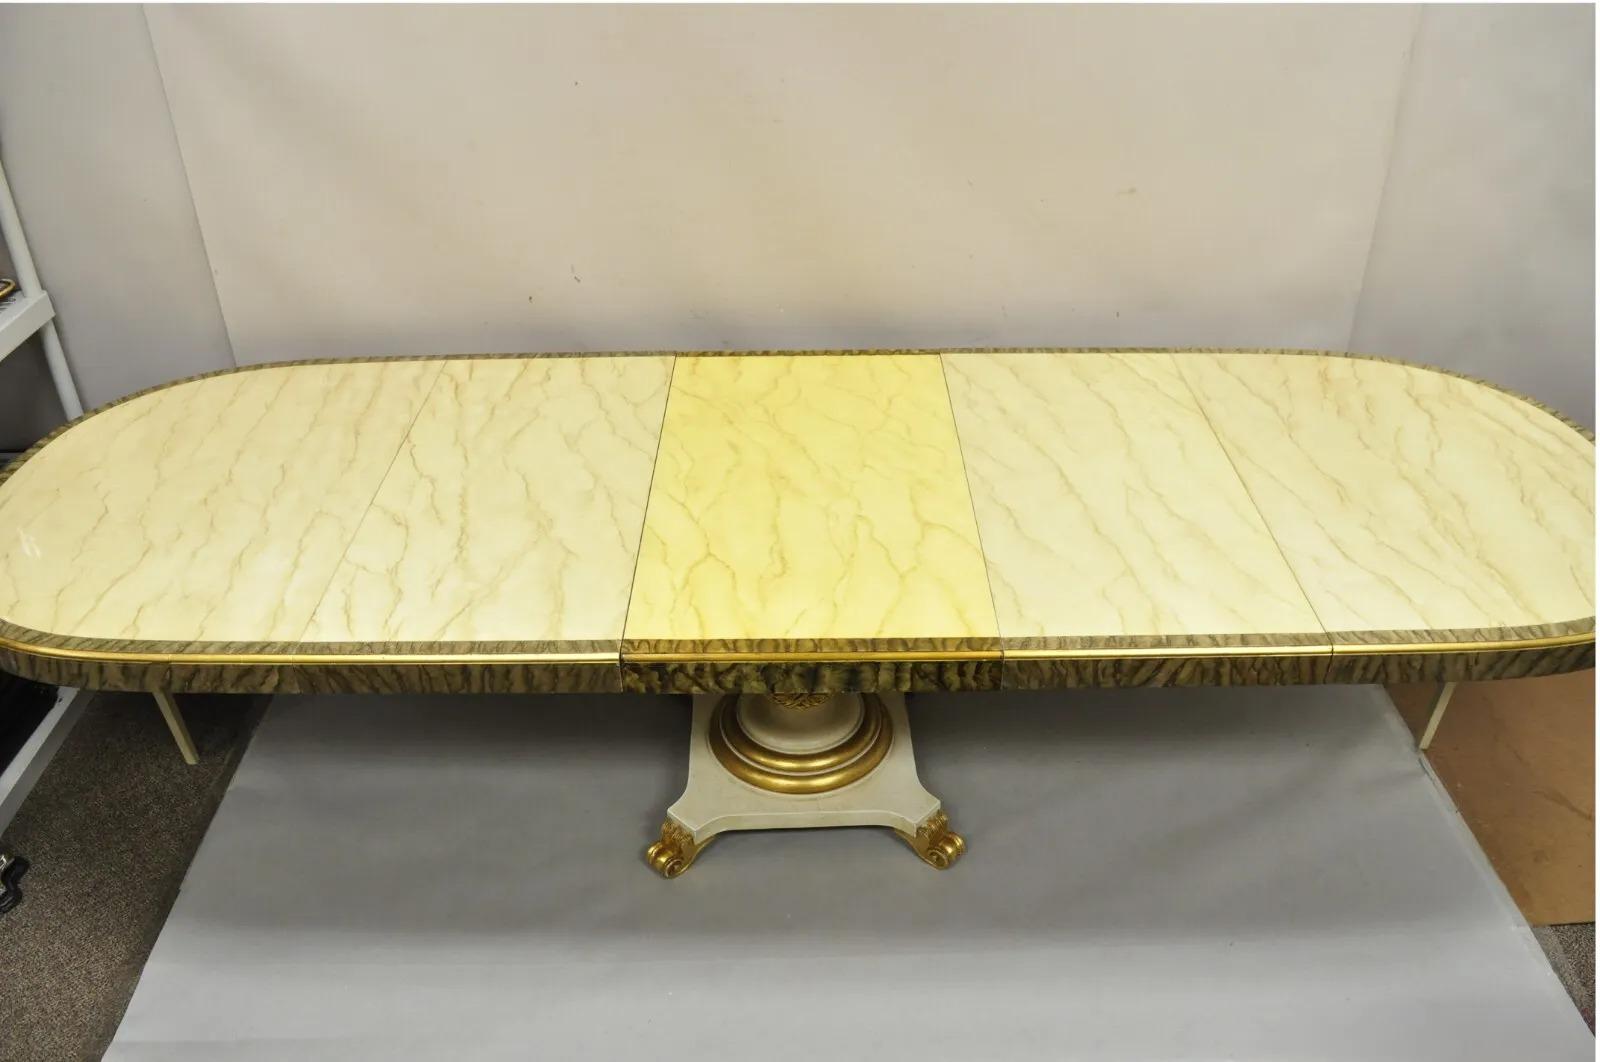 Italian Regency Cream & Gold Gilt Lacquered Urn Pedestal Dining Table - 3 Leaves For Sale 4